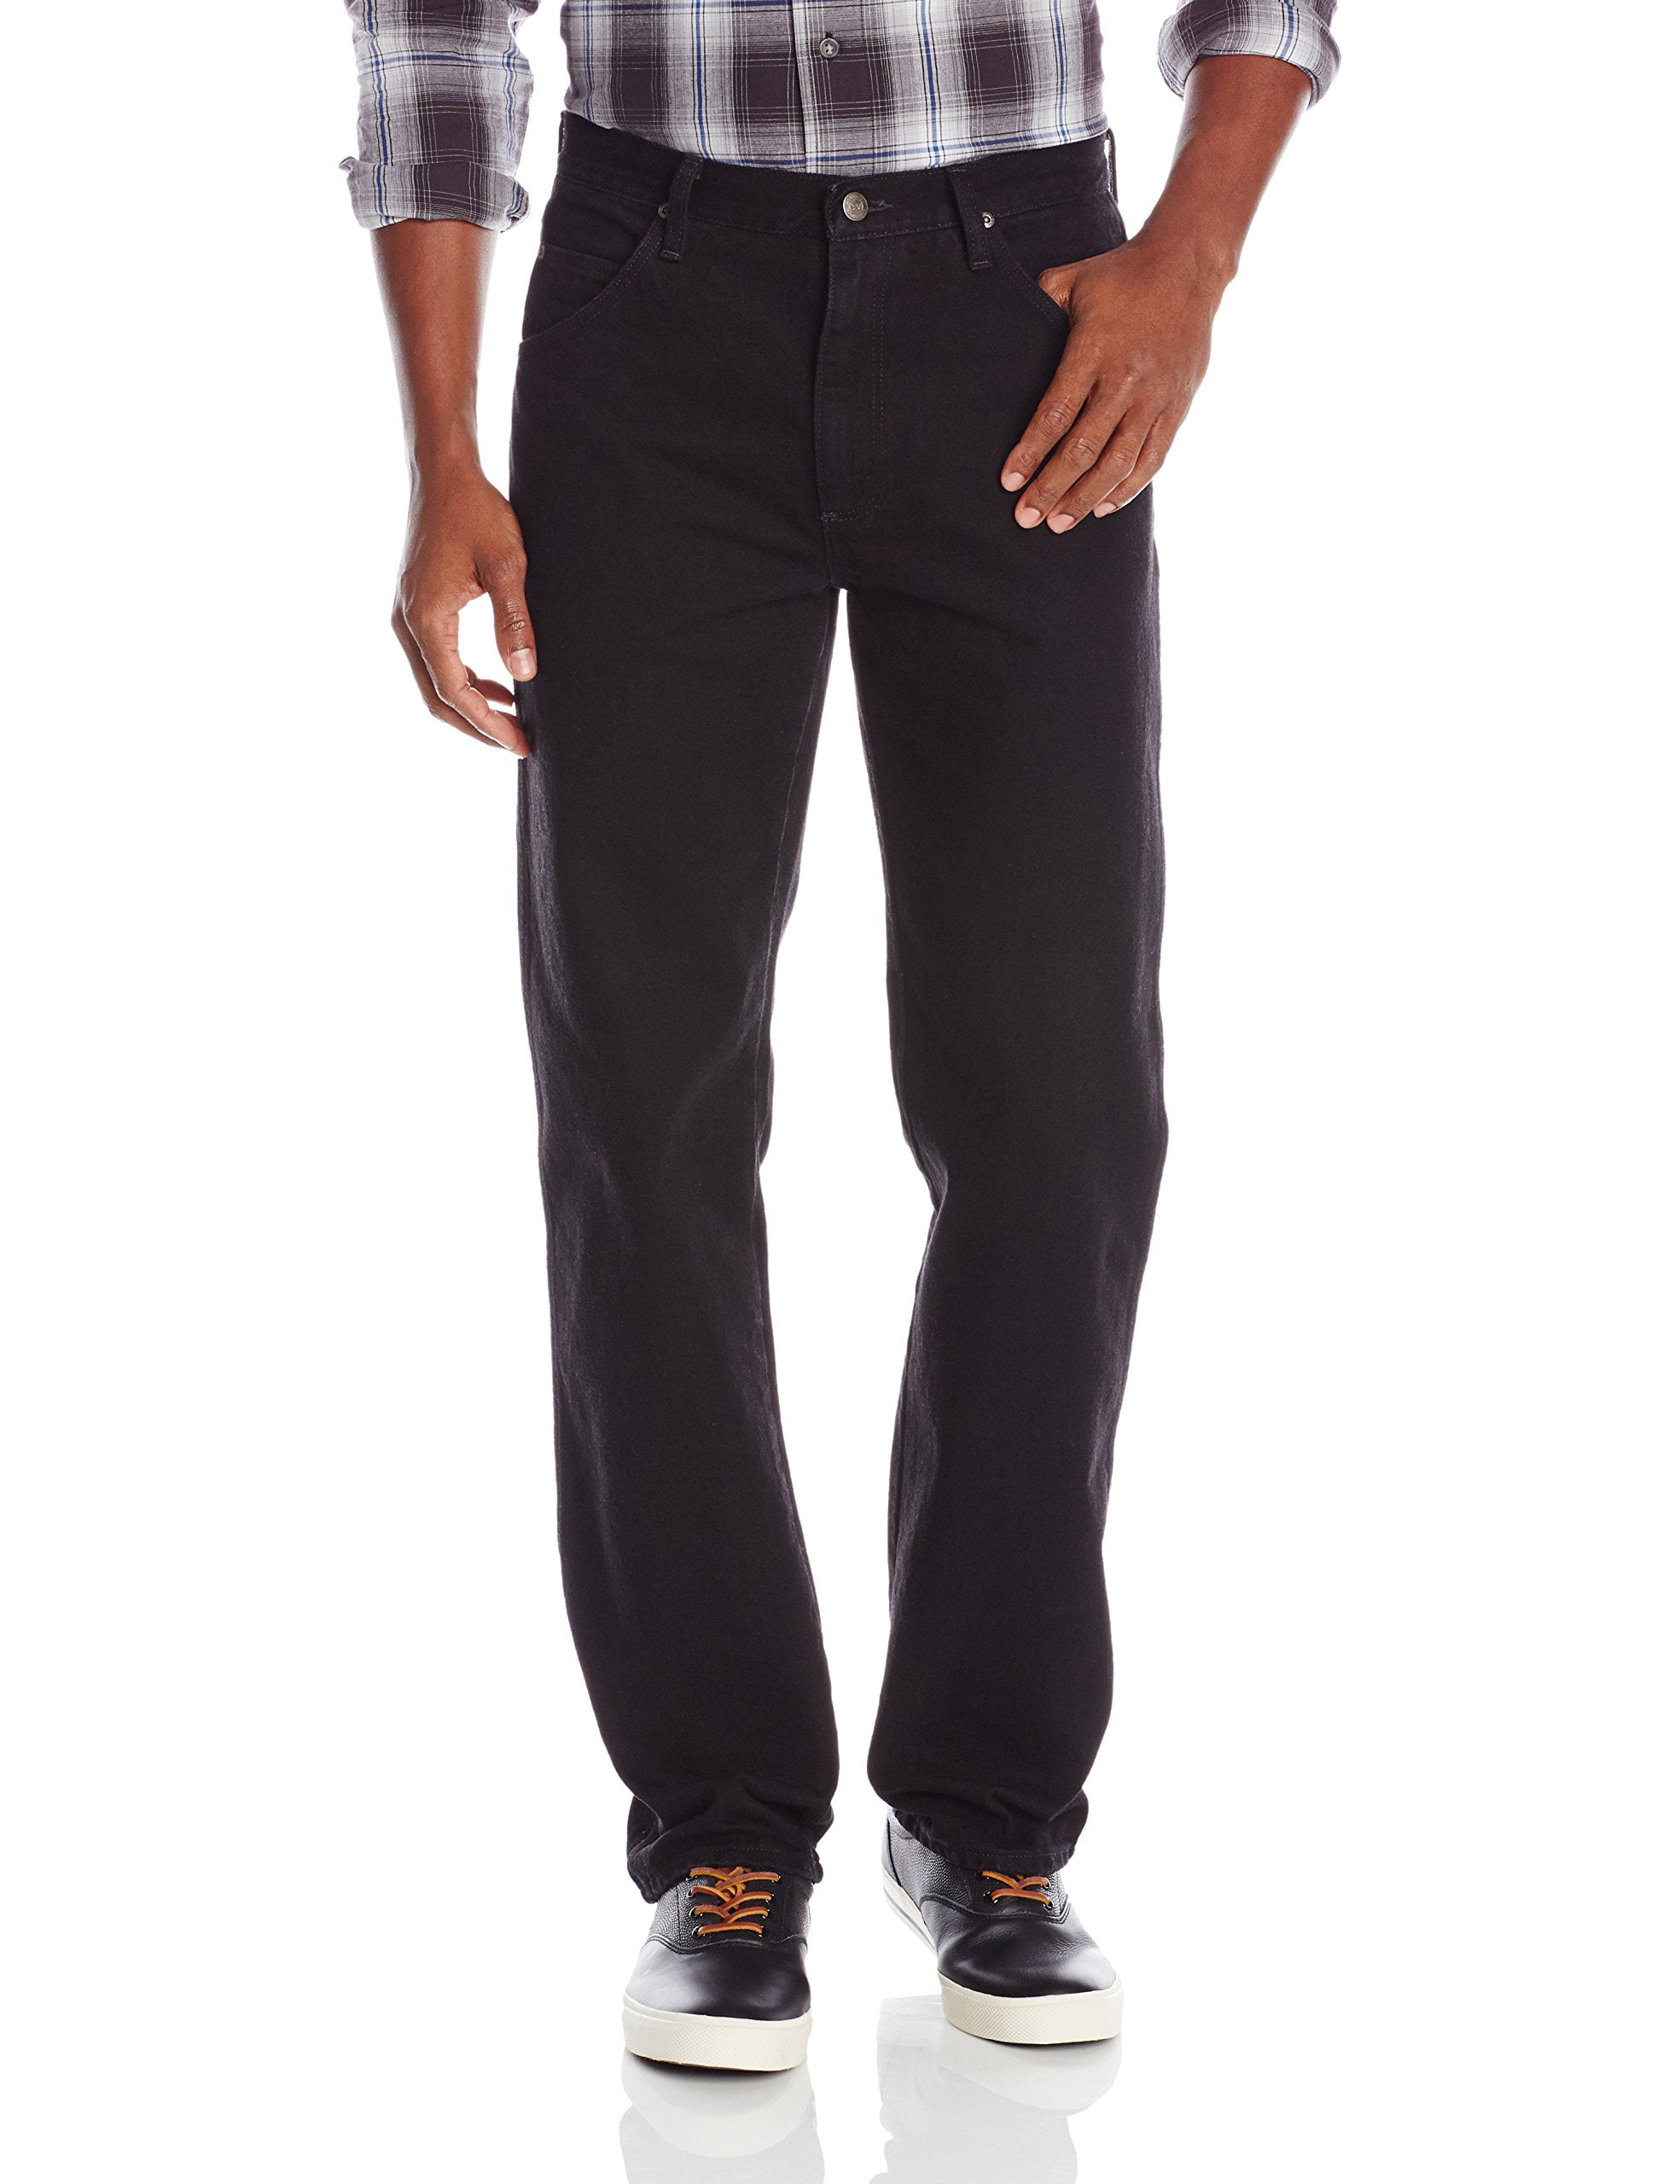 Wrangler Authentics Men's Classic 5-Pocket Regular Fit, Black, Size 35W x  34L